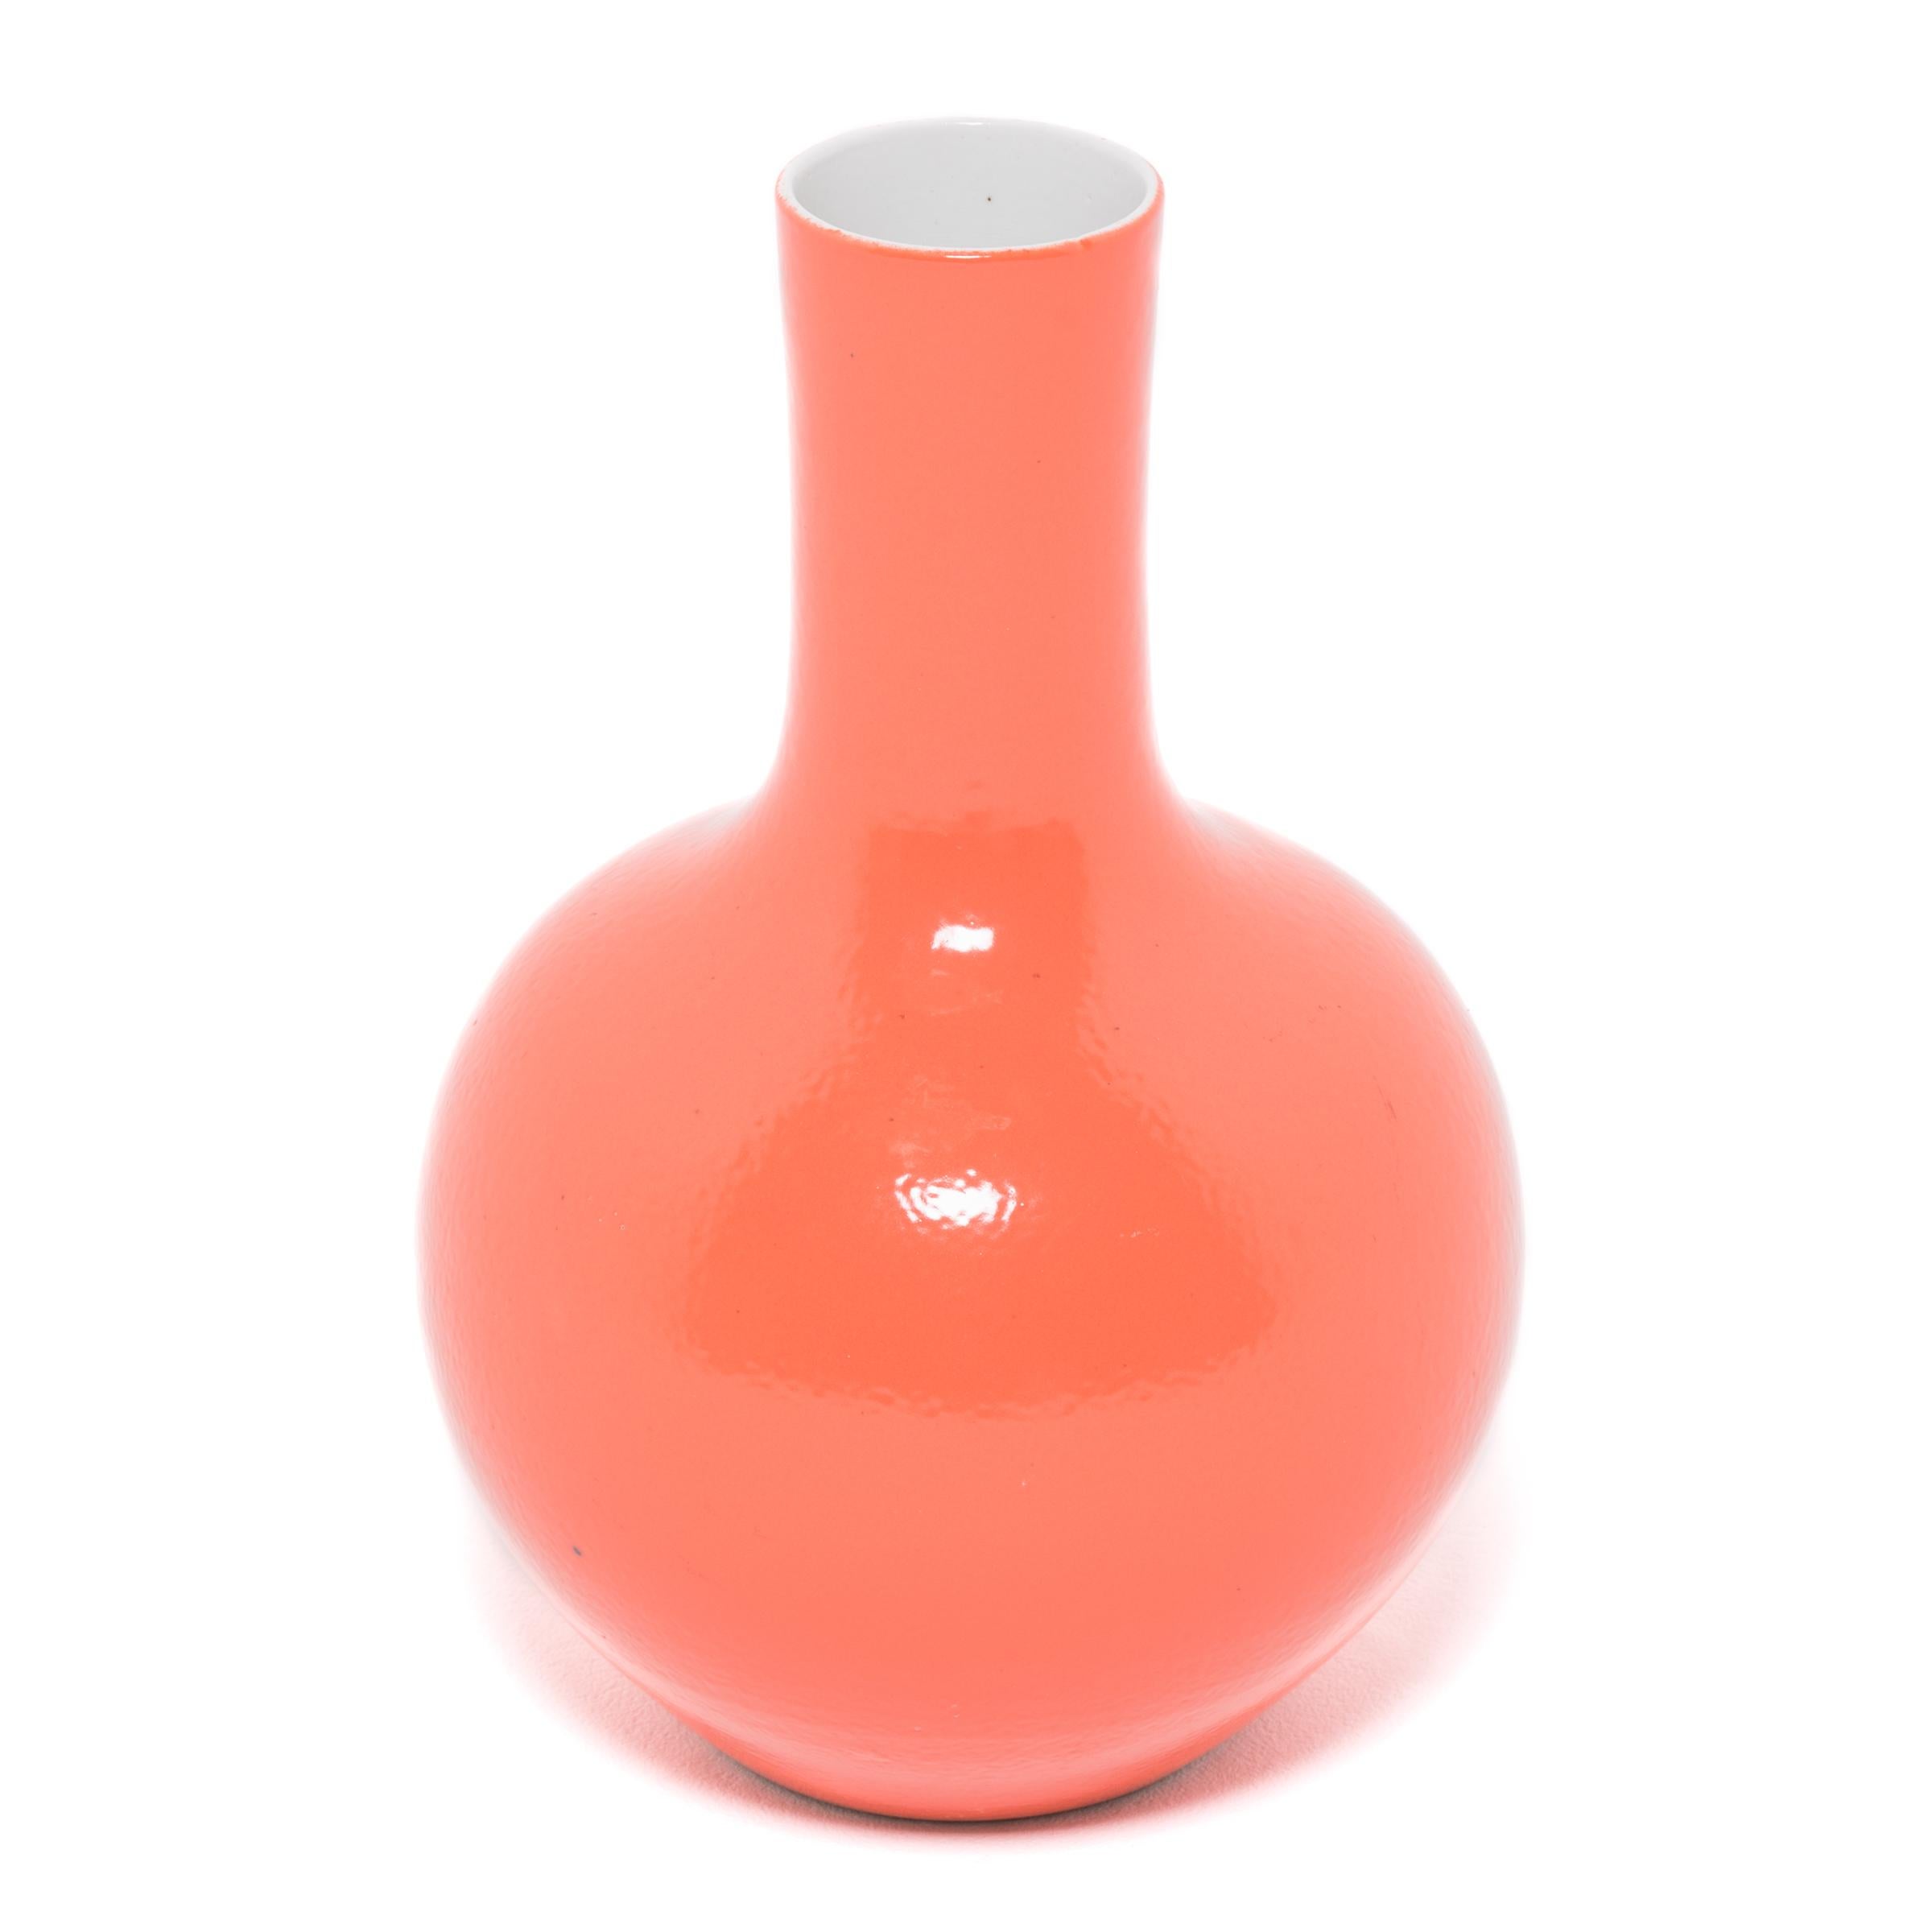 vase reference image